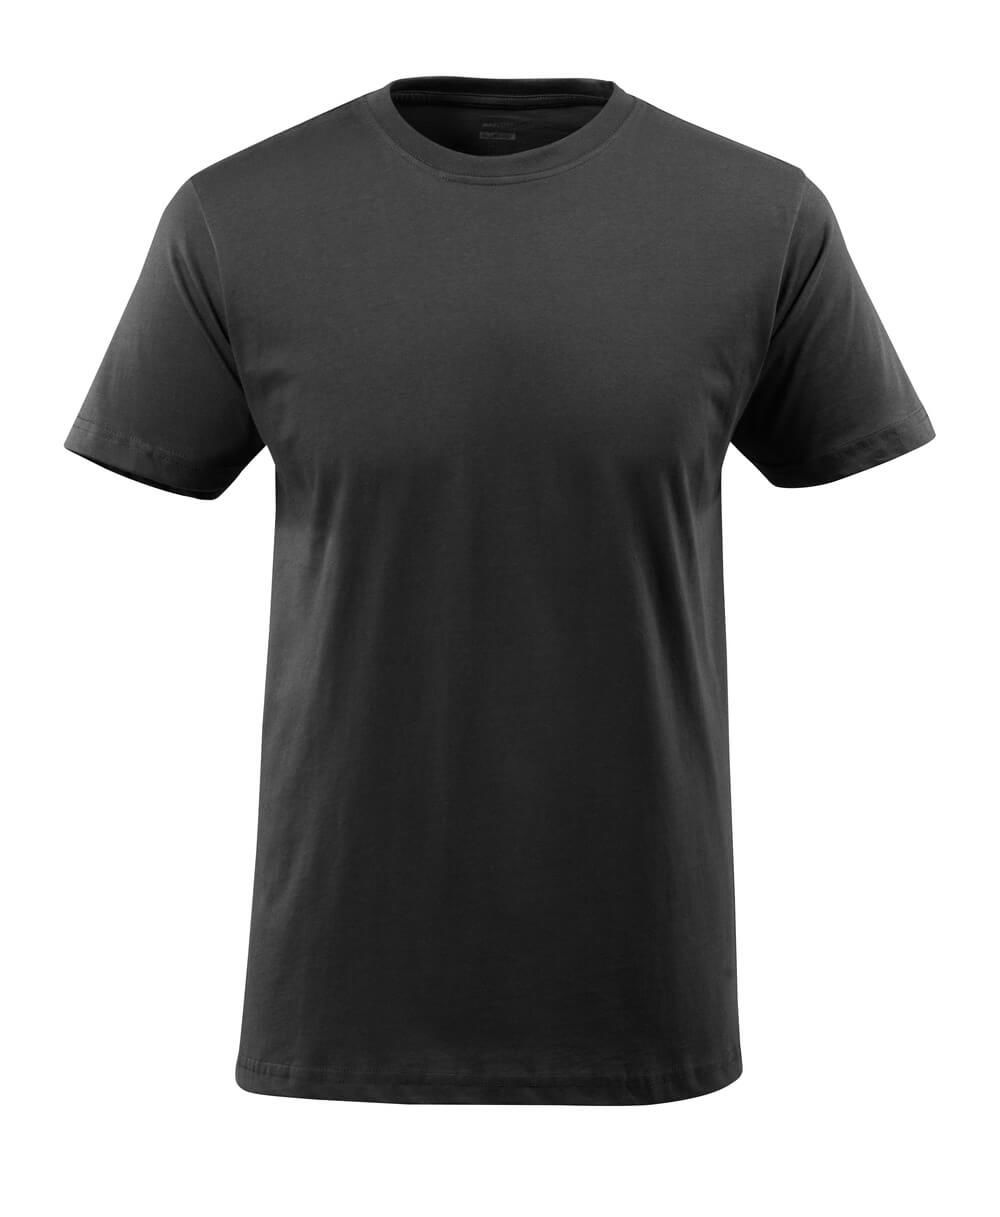 Mascot Workwear Black Cotton Short Sleeve T-Shirt, UK- S, EUR- S